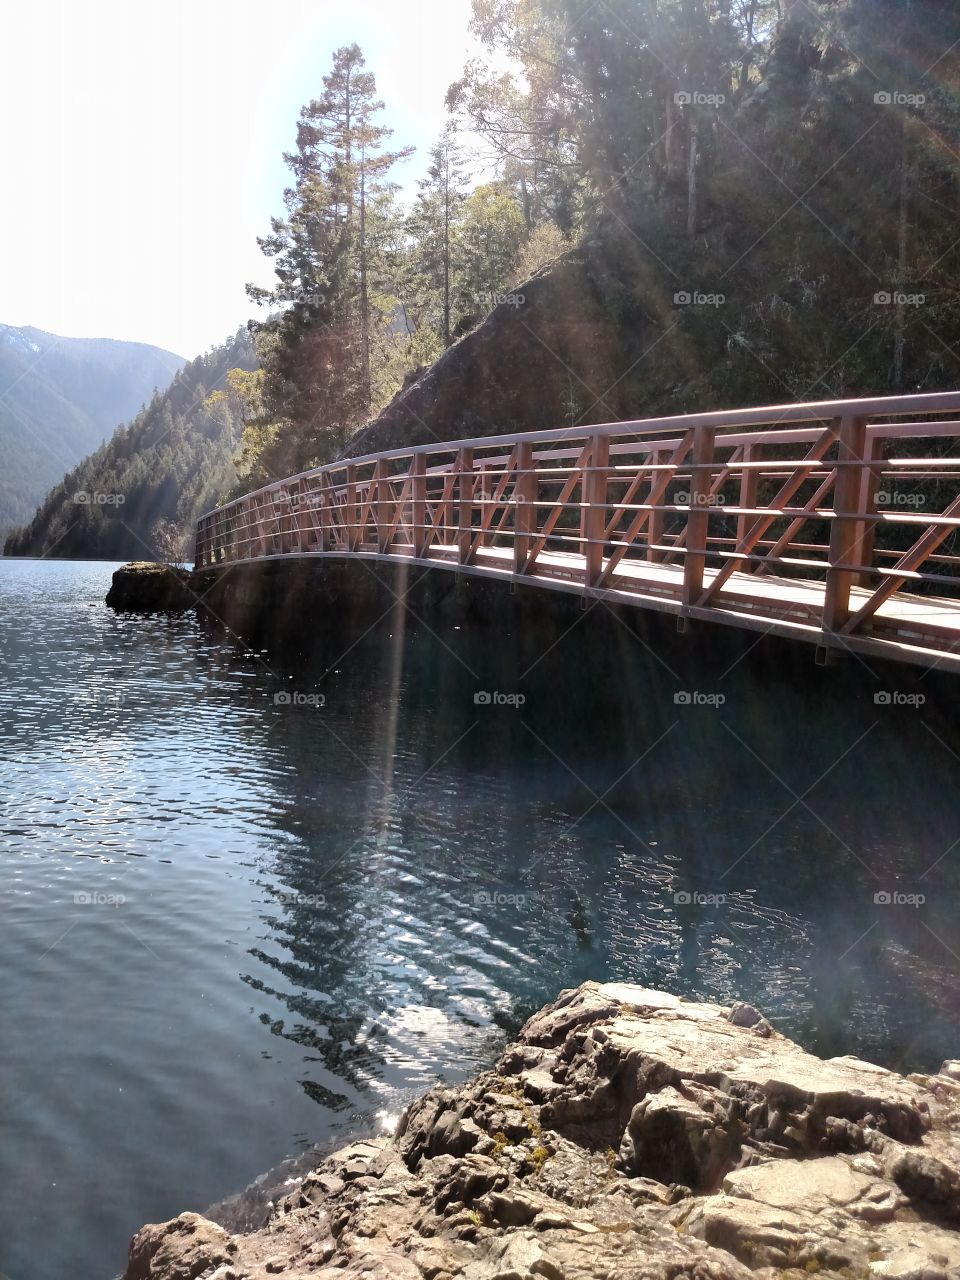 Spruce Railroad Bridge on Lake Crescent in the Pacific Northwest